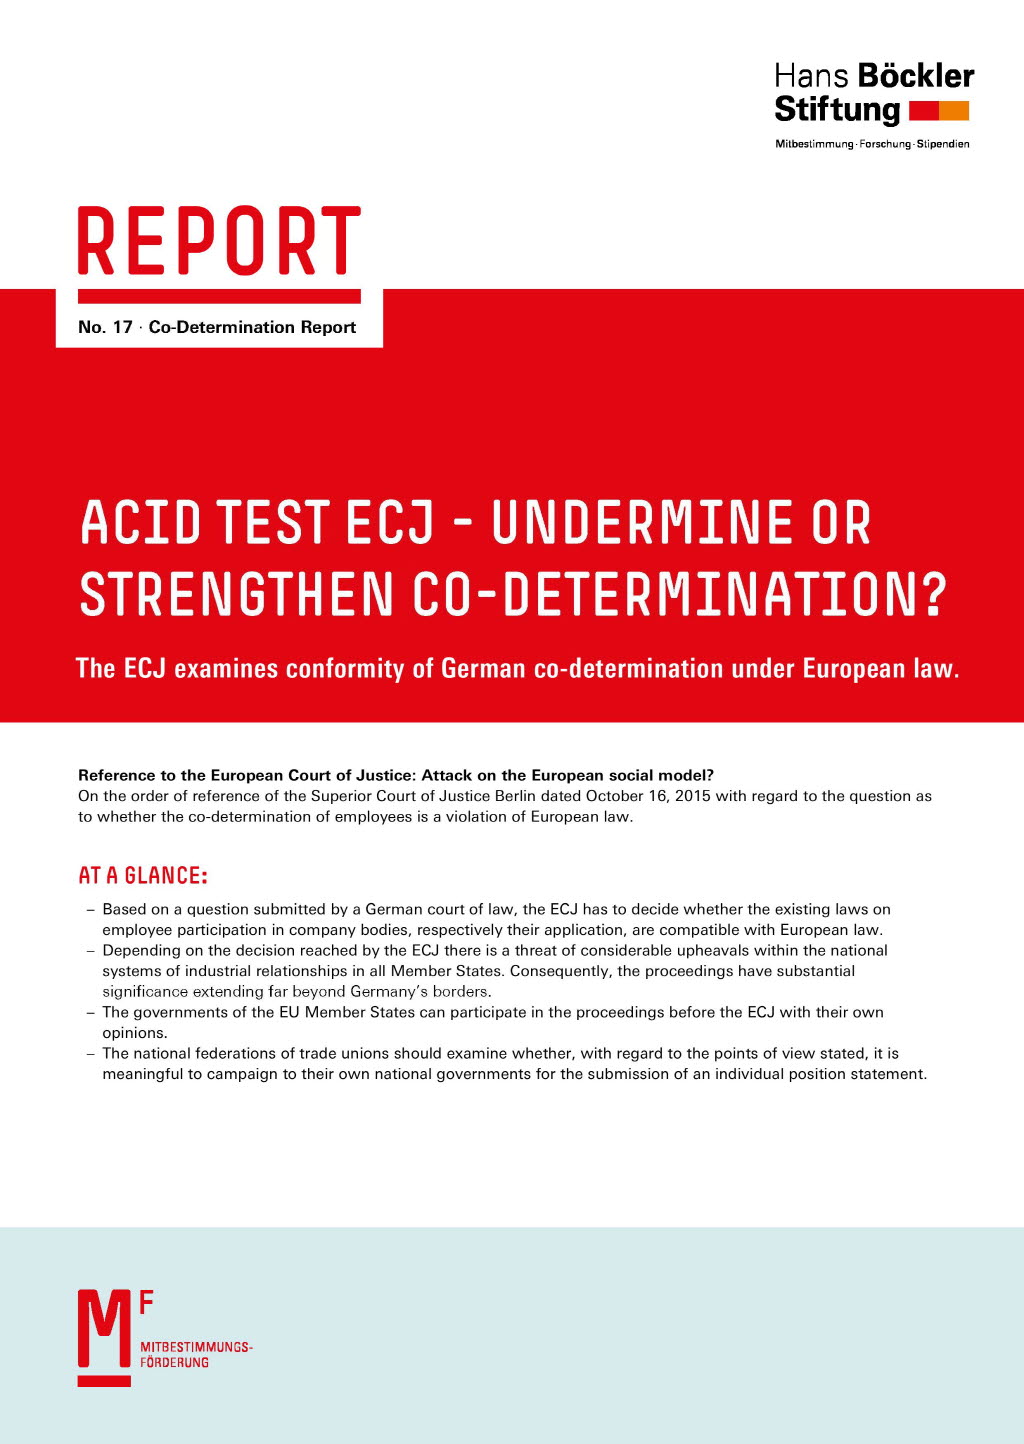 Acid Test ECJ - Undermine or Strengthen Co-Determination?